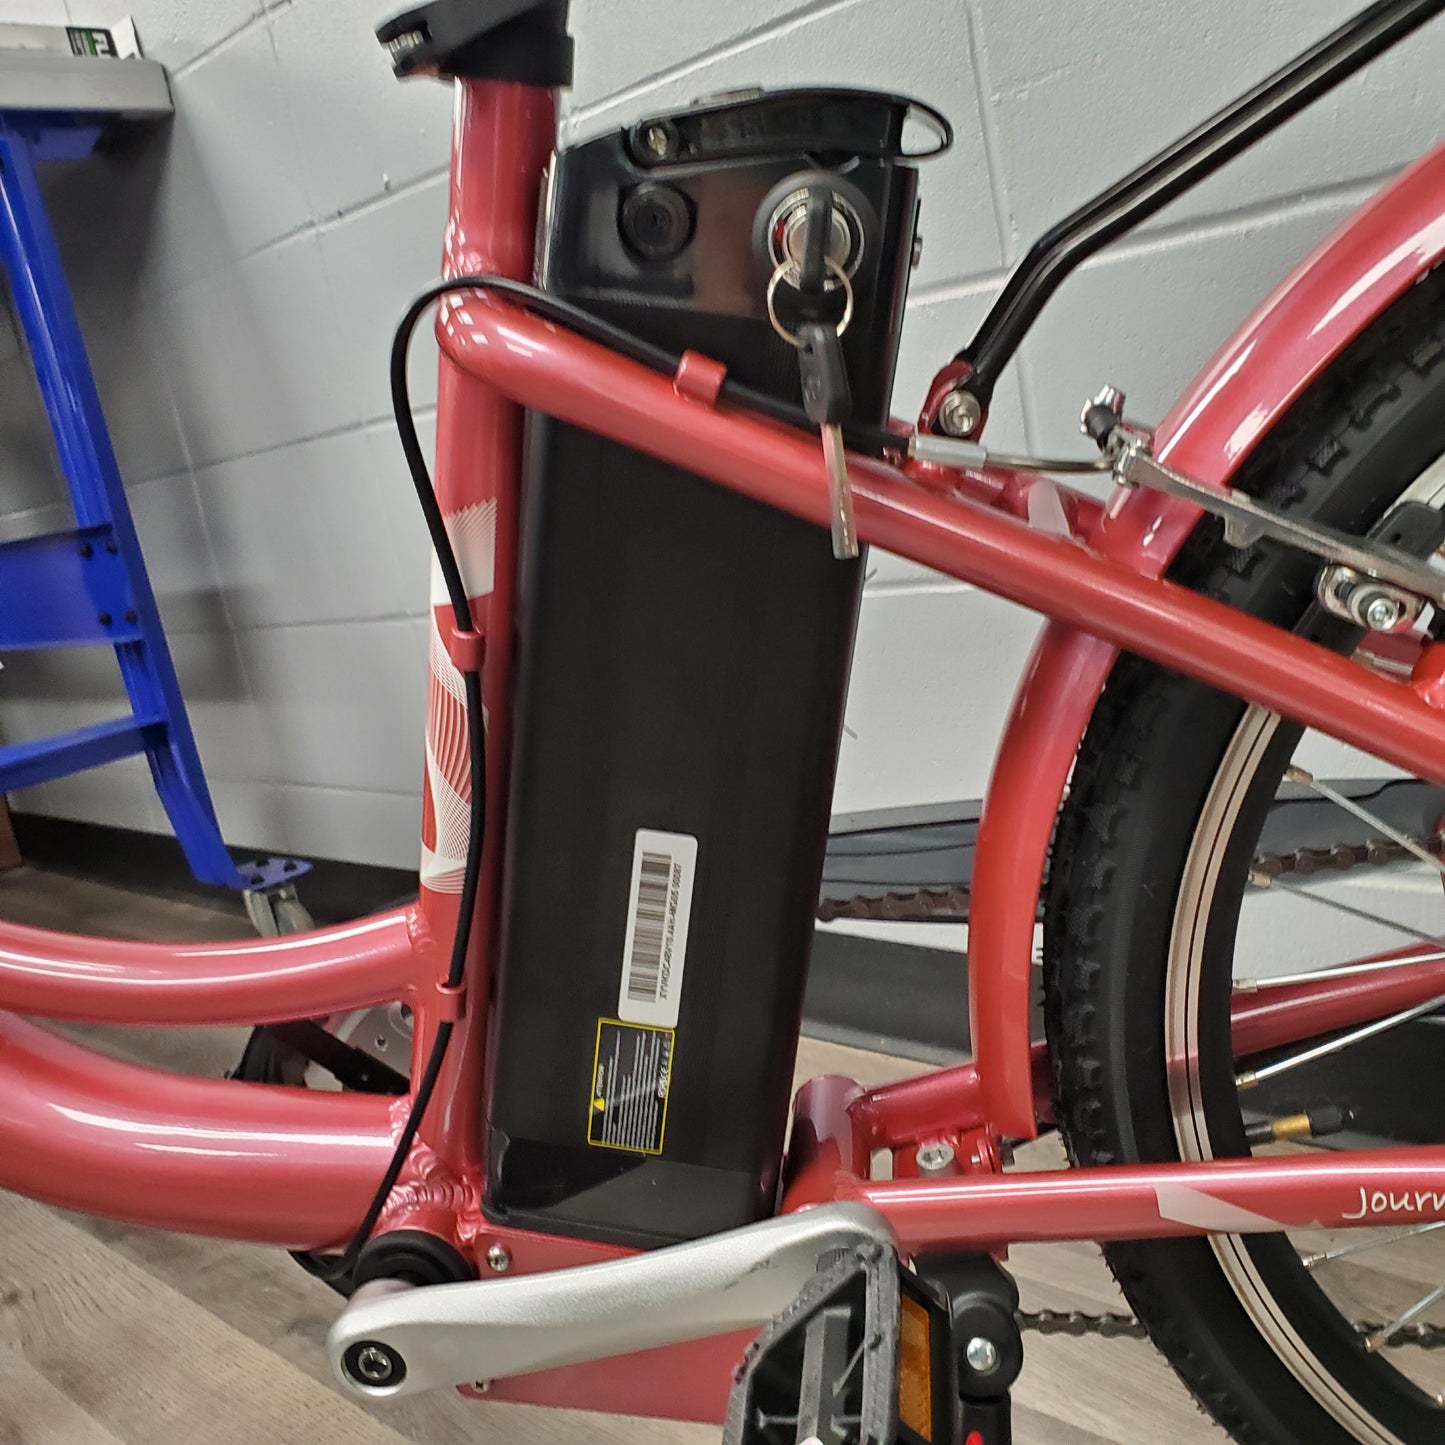 Step Through Electric Bike | Bintelli Journey Watermelon